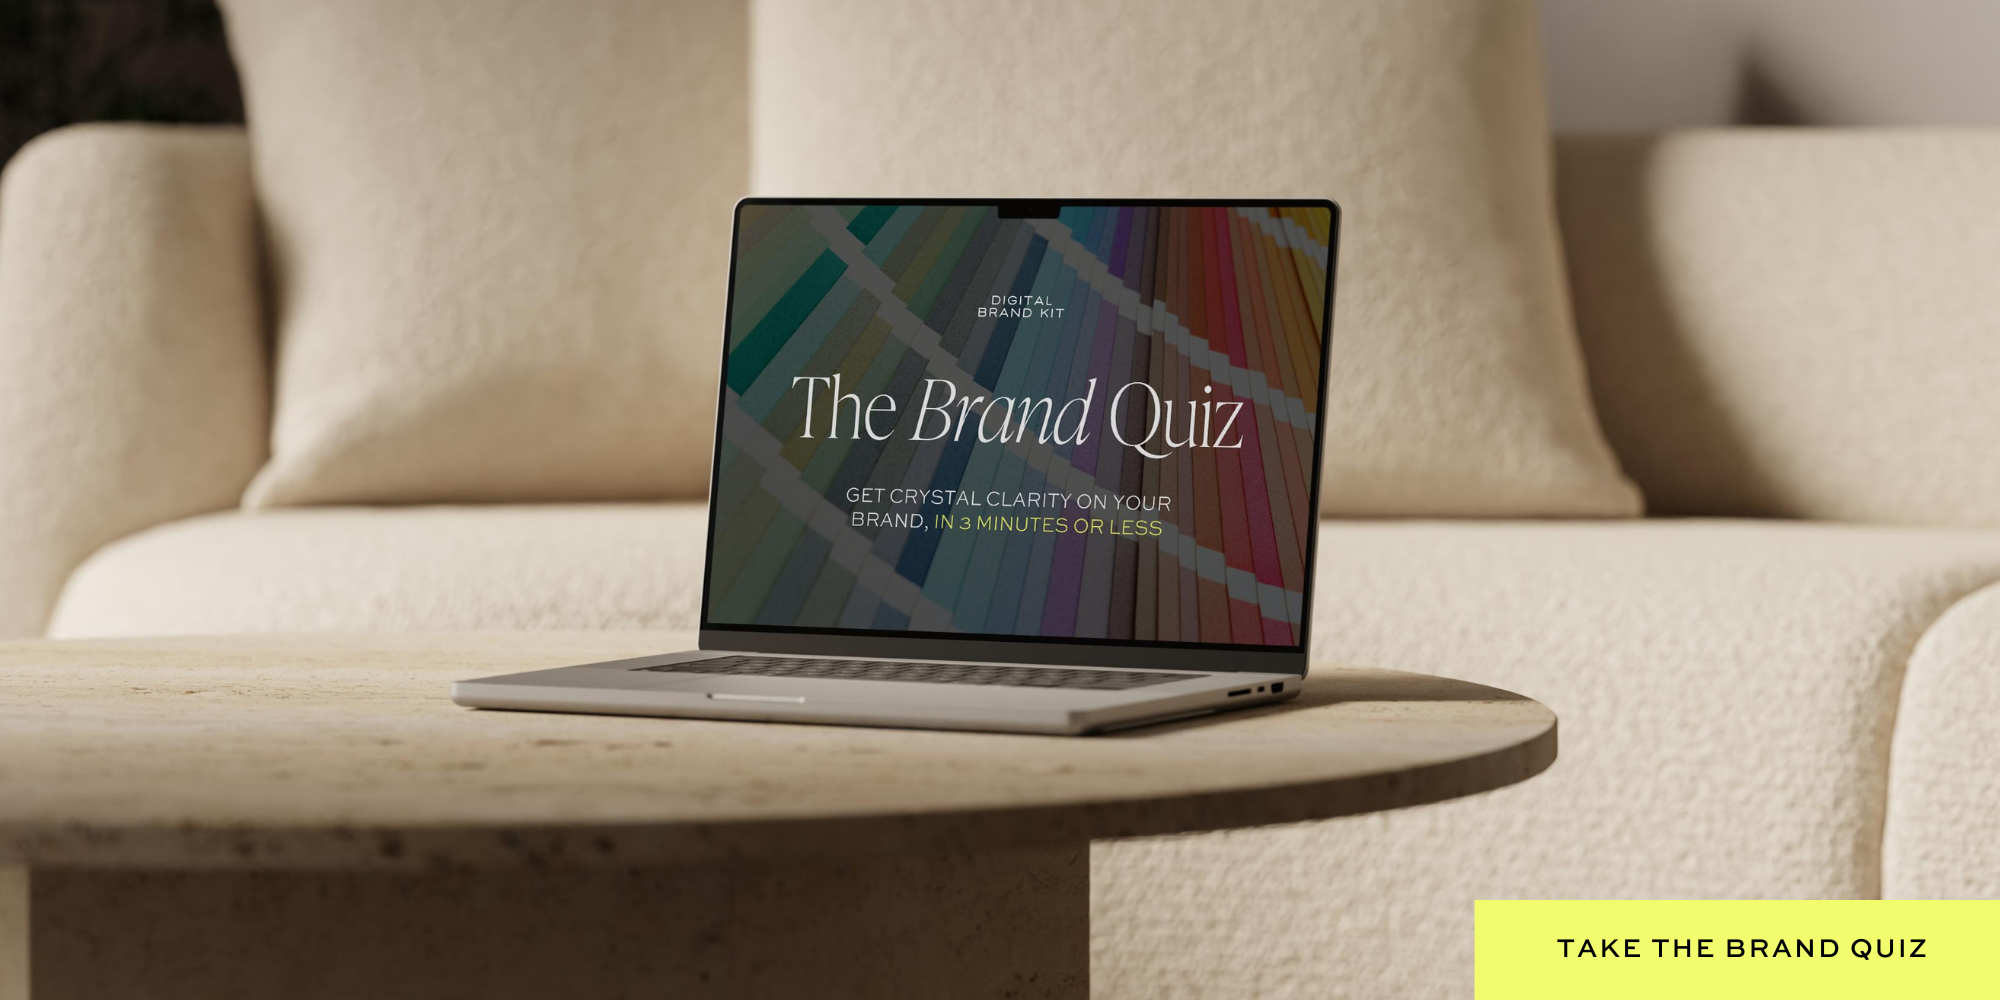 The Digital Brand Kit Brand Quiz